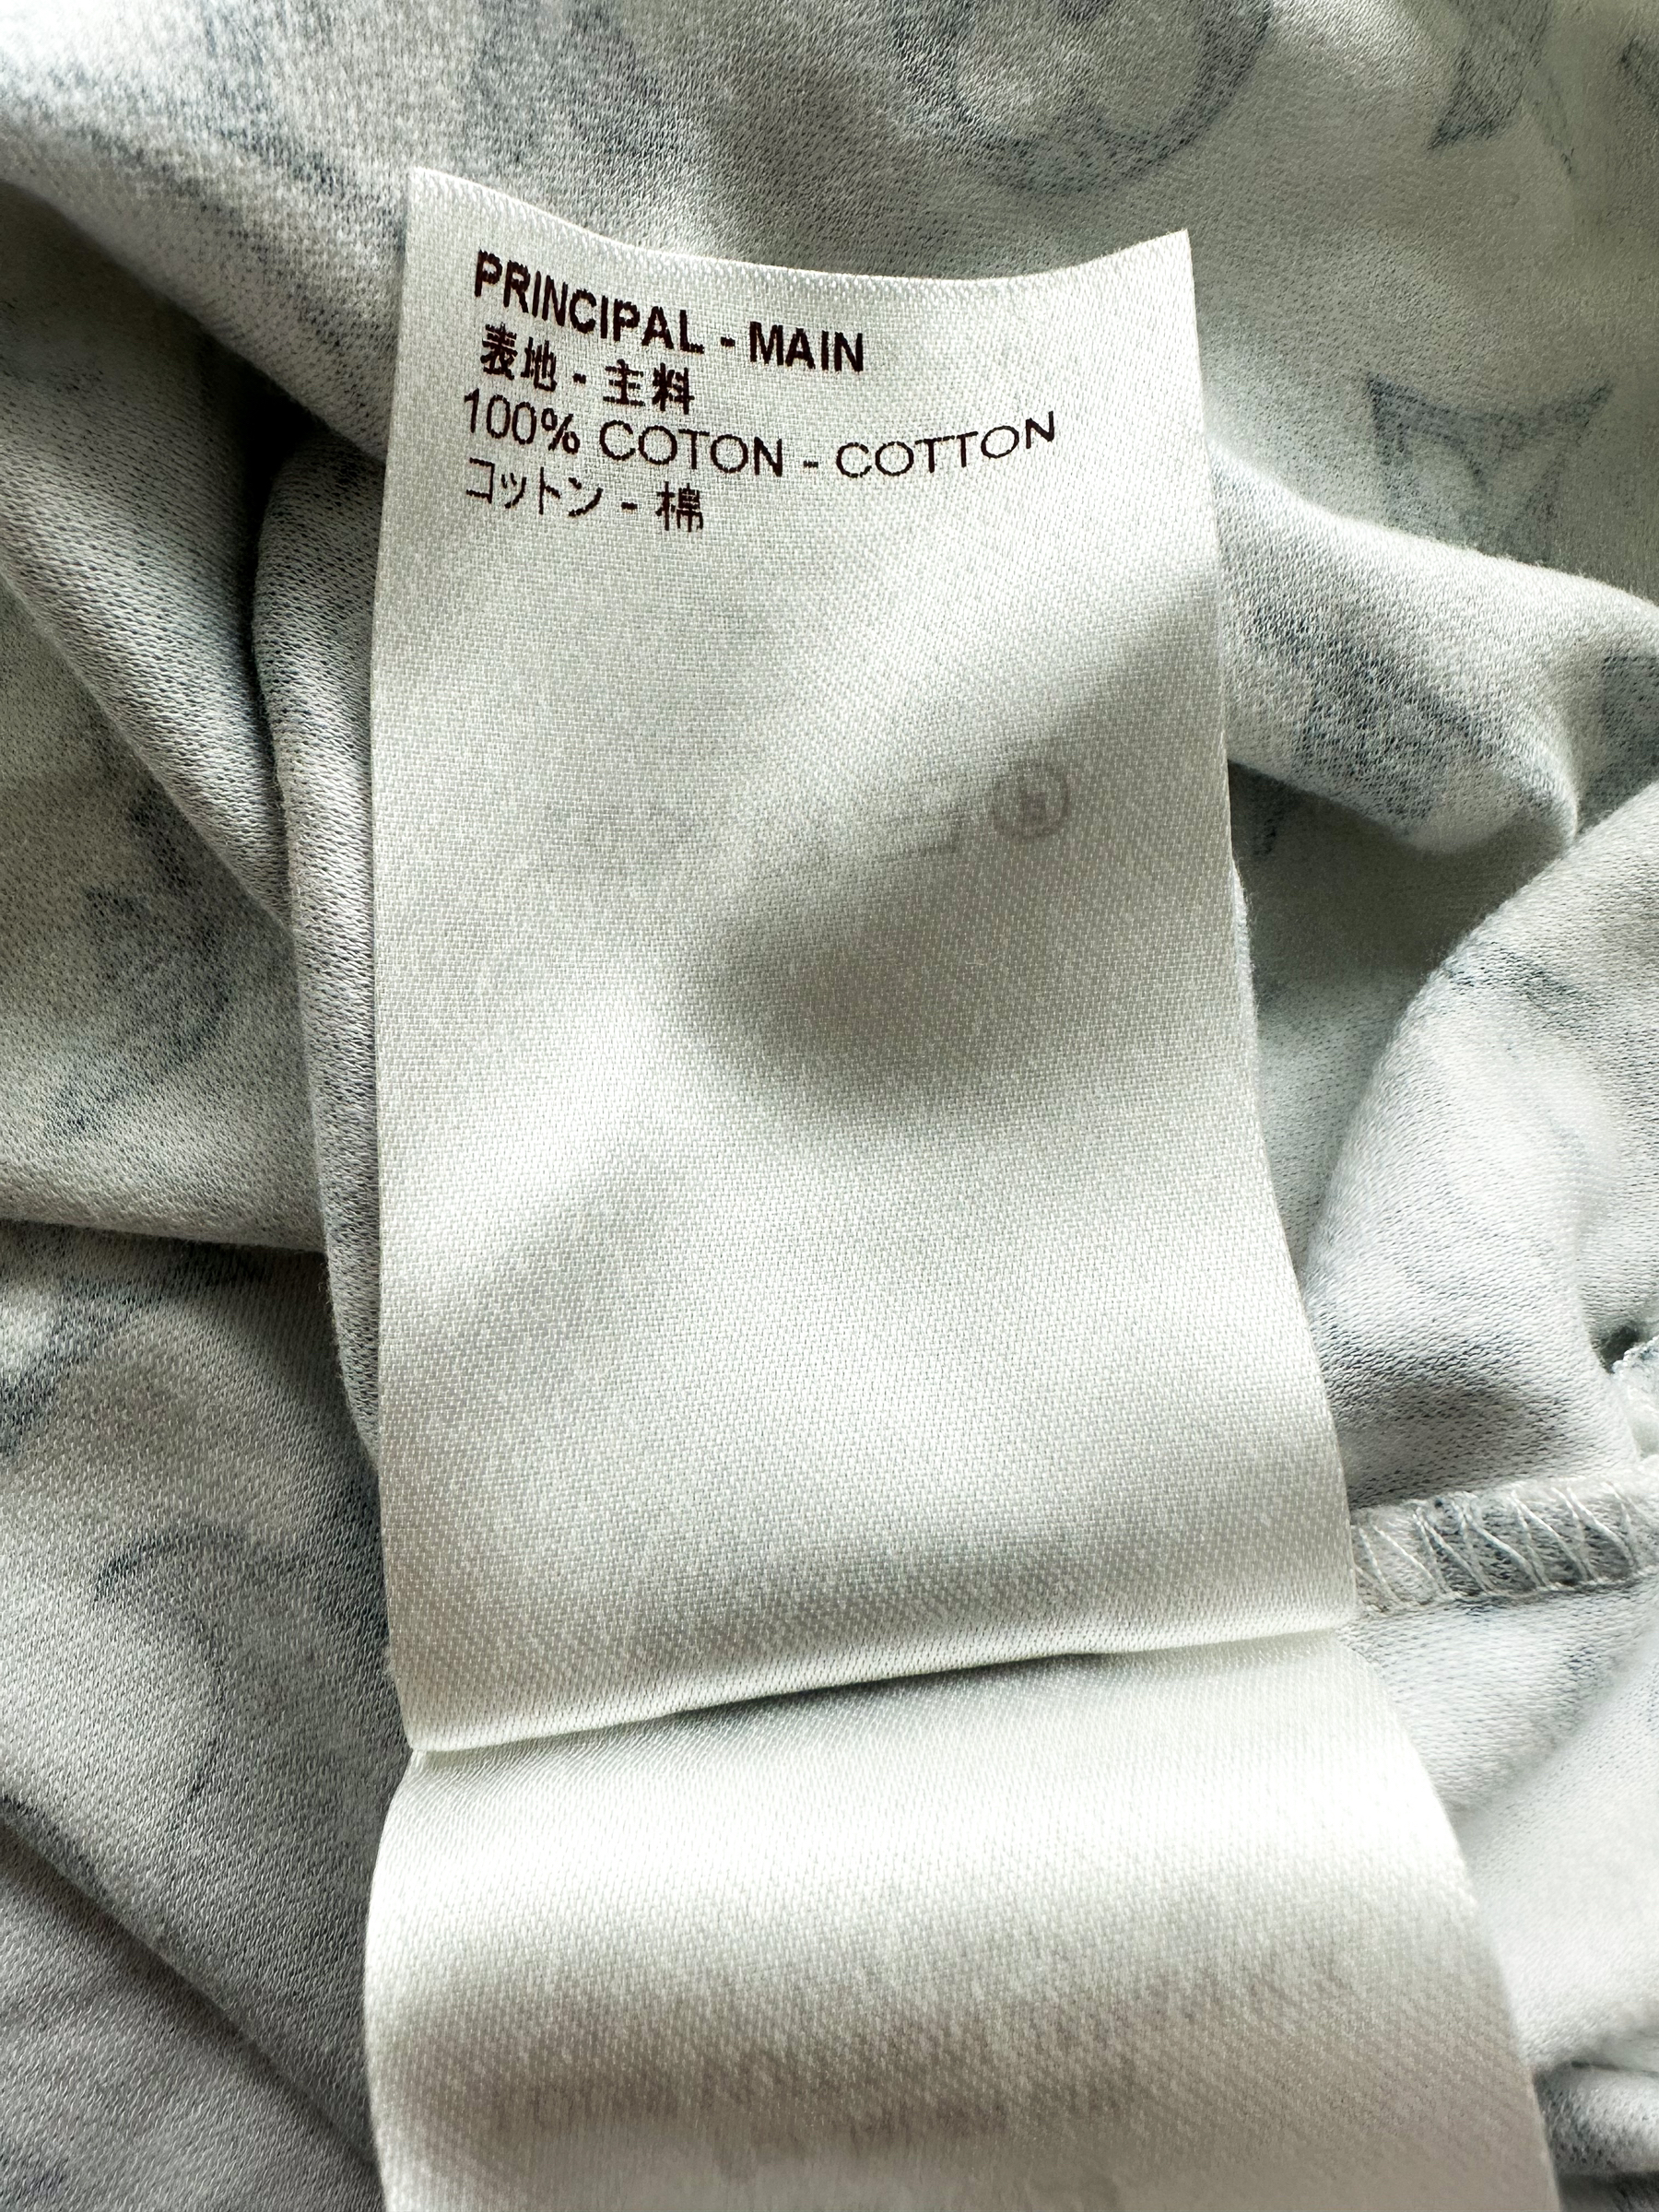 Louis Vuitton Chapman Tiger Tshirt, Men's Fashion, Tops & Sets